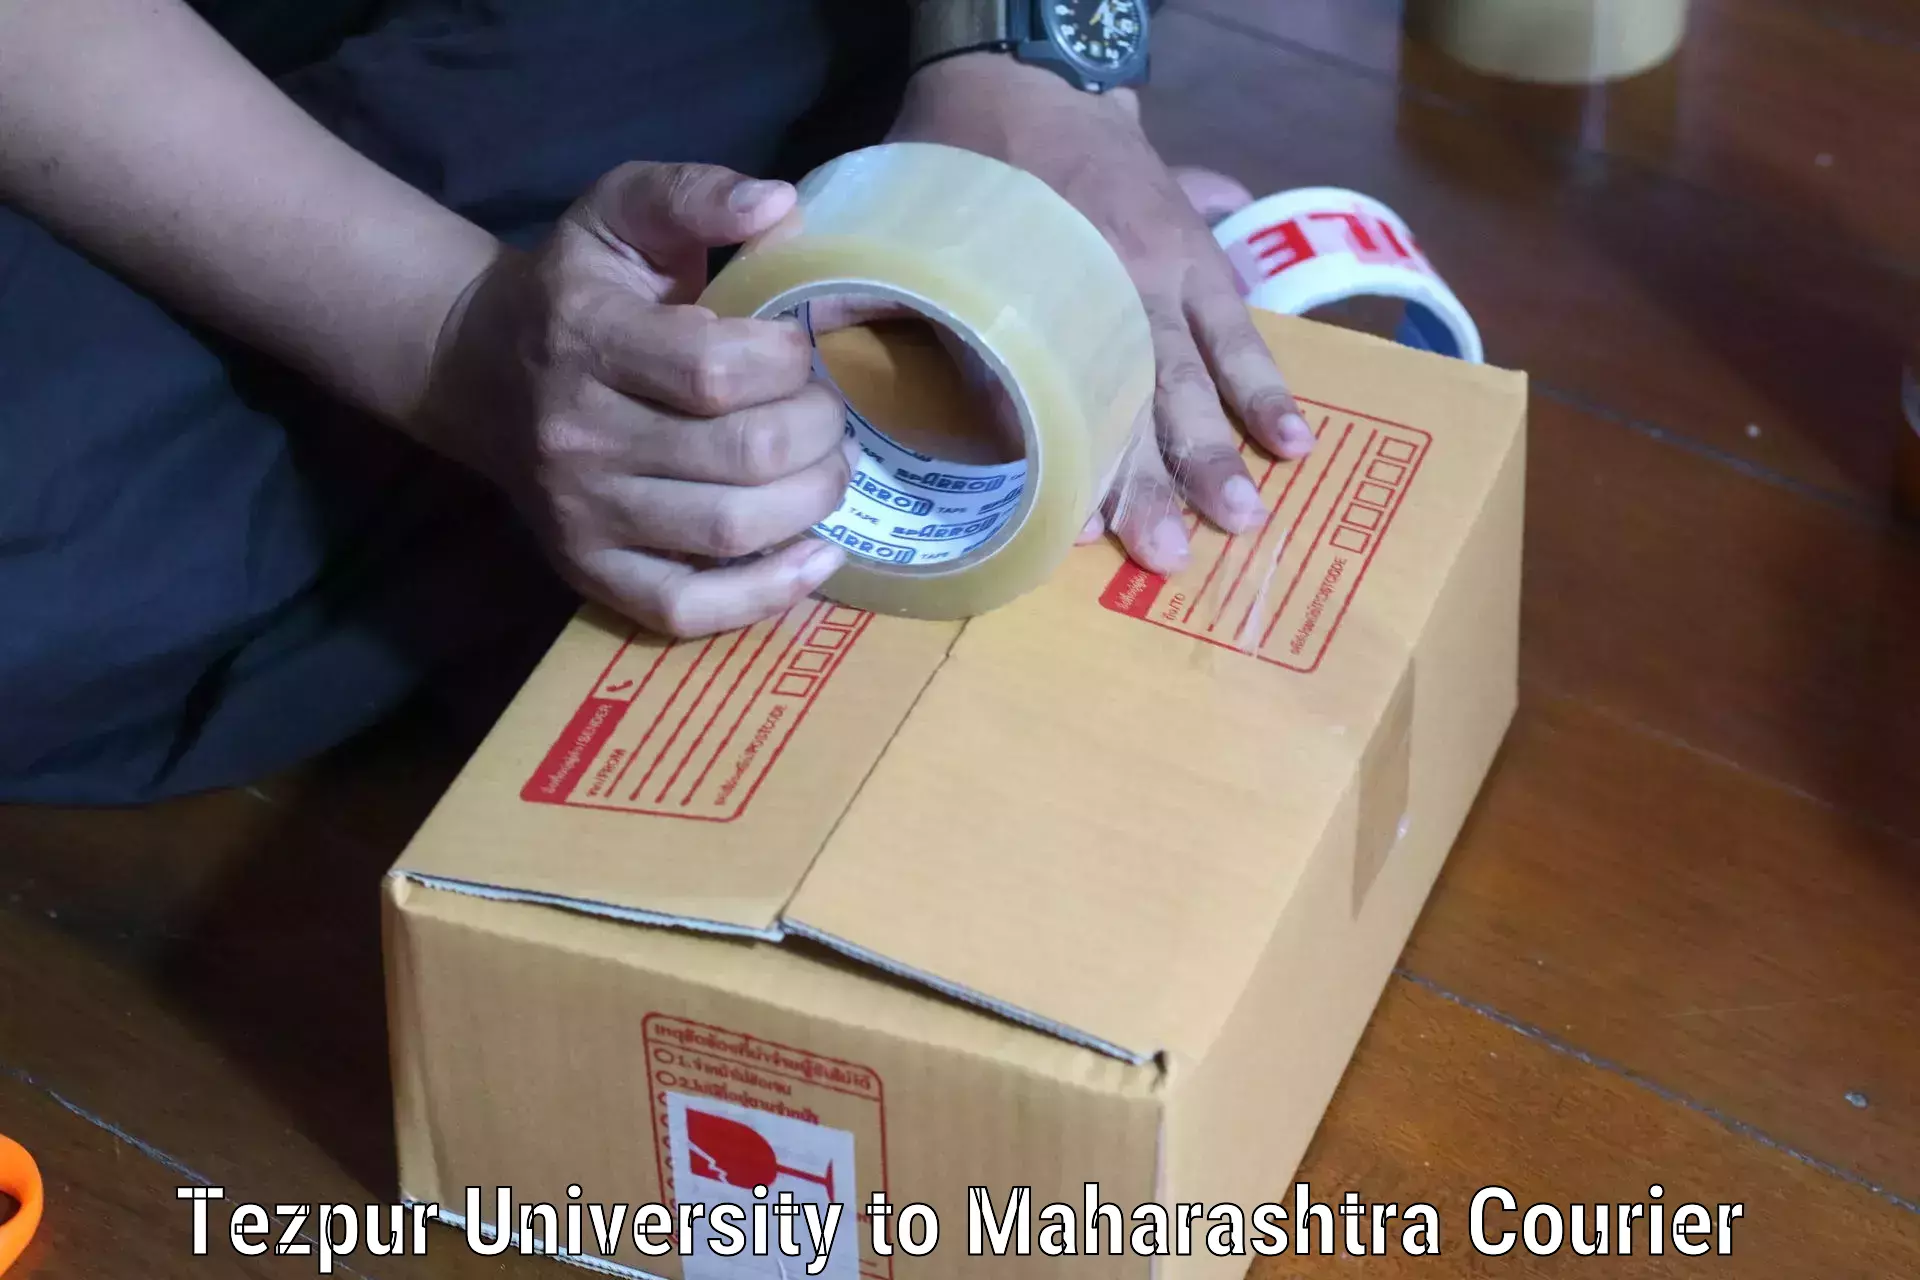 Courier service booking Tezpur University to Maharashtra